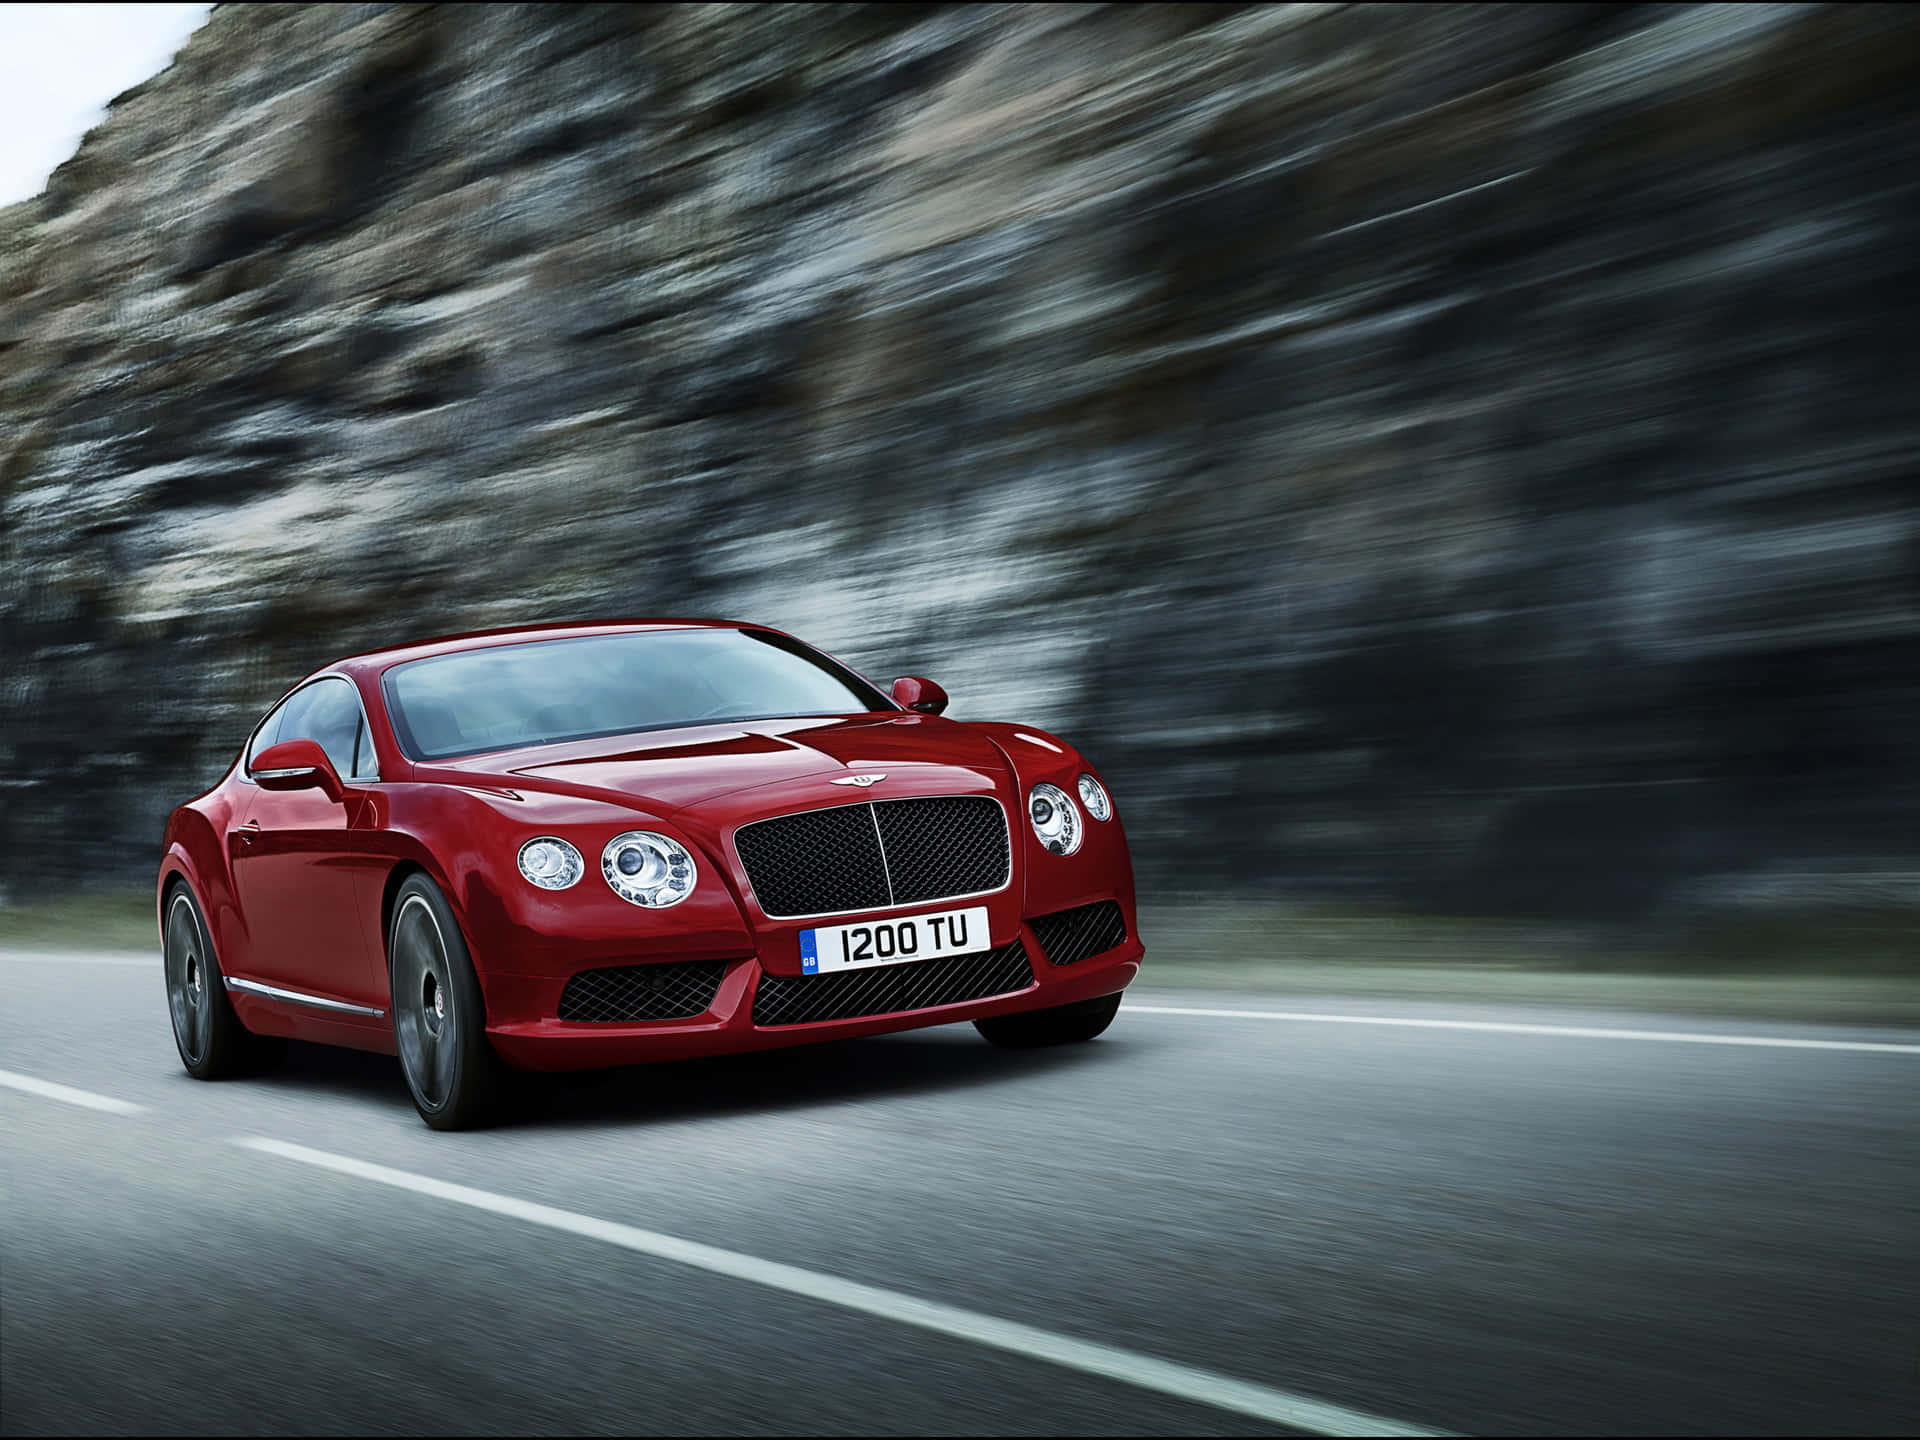 Caption: A magnificent Bentley Continental GT in a captivating setting. Wallpaper